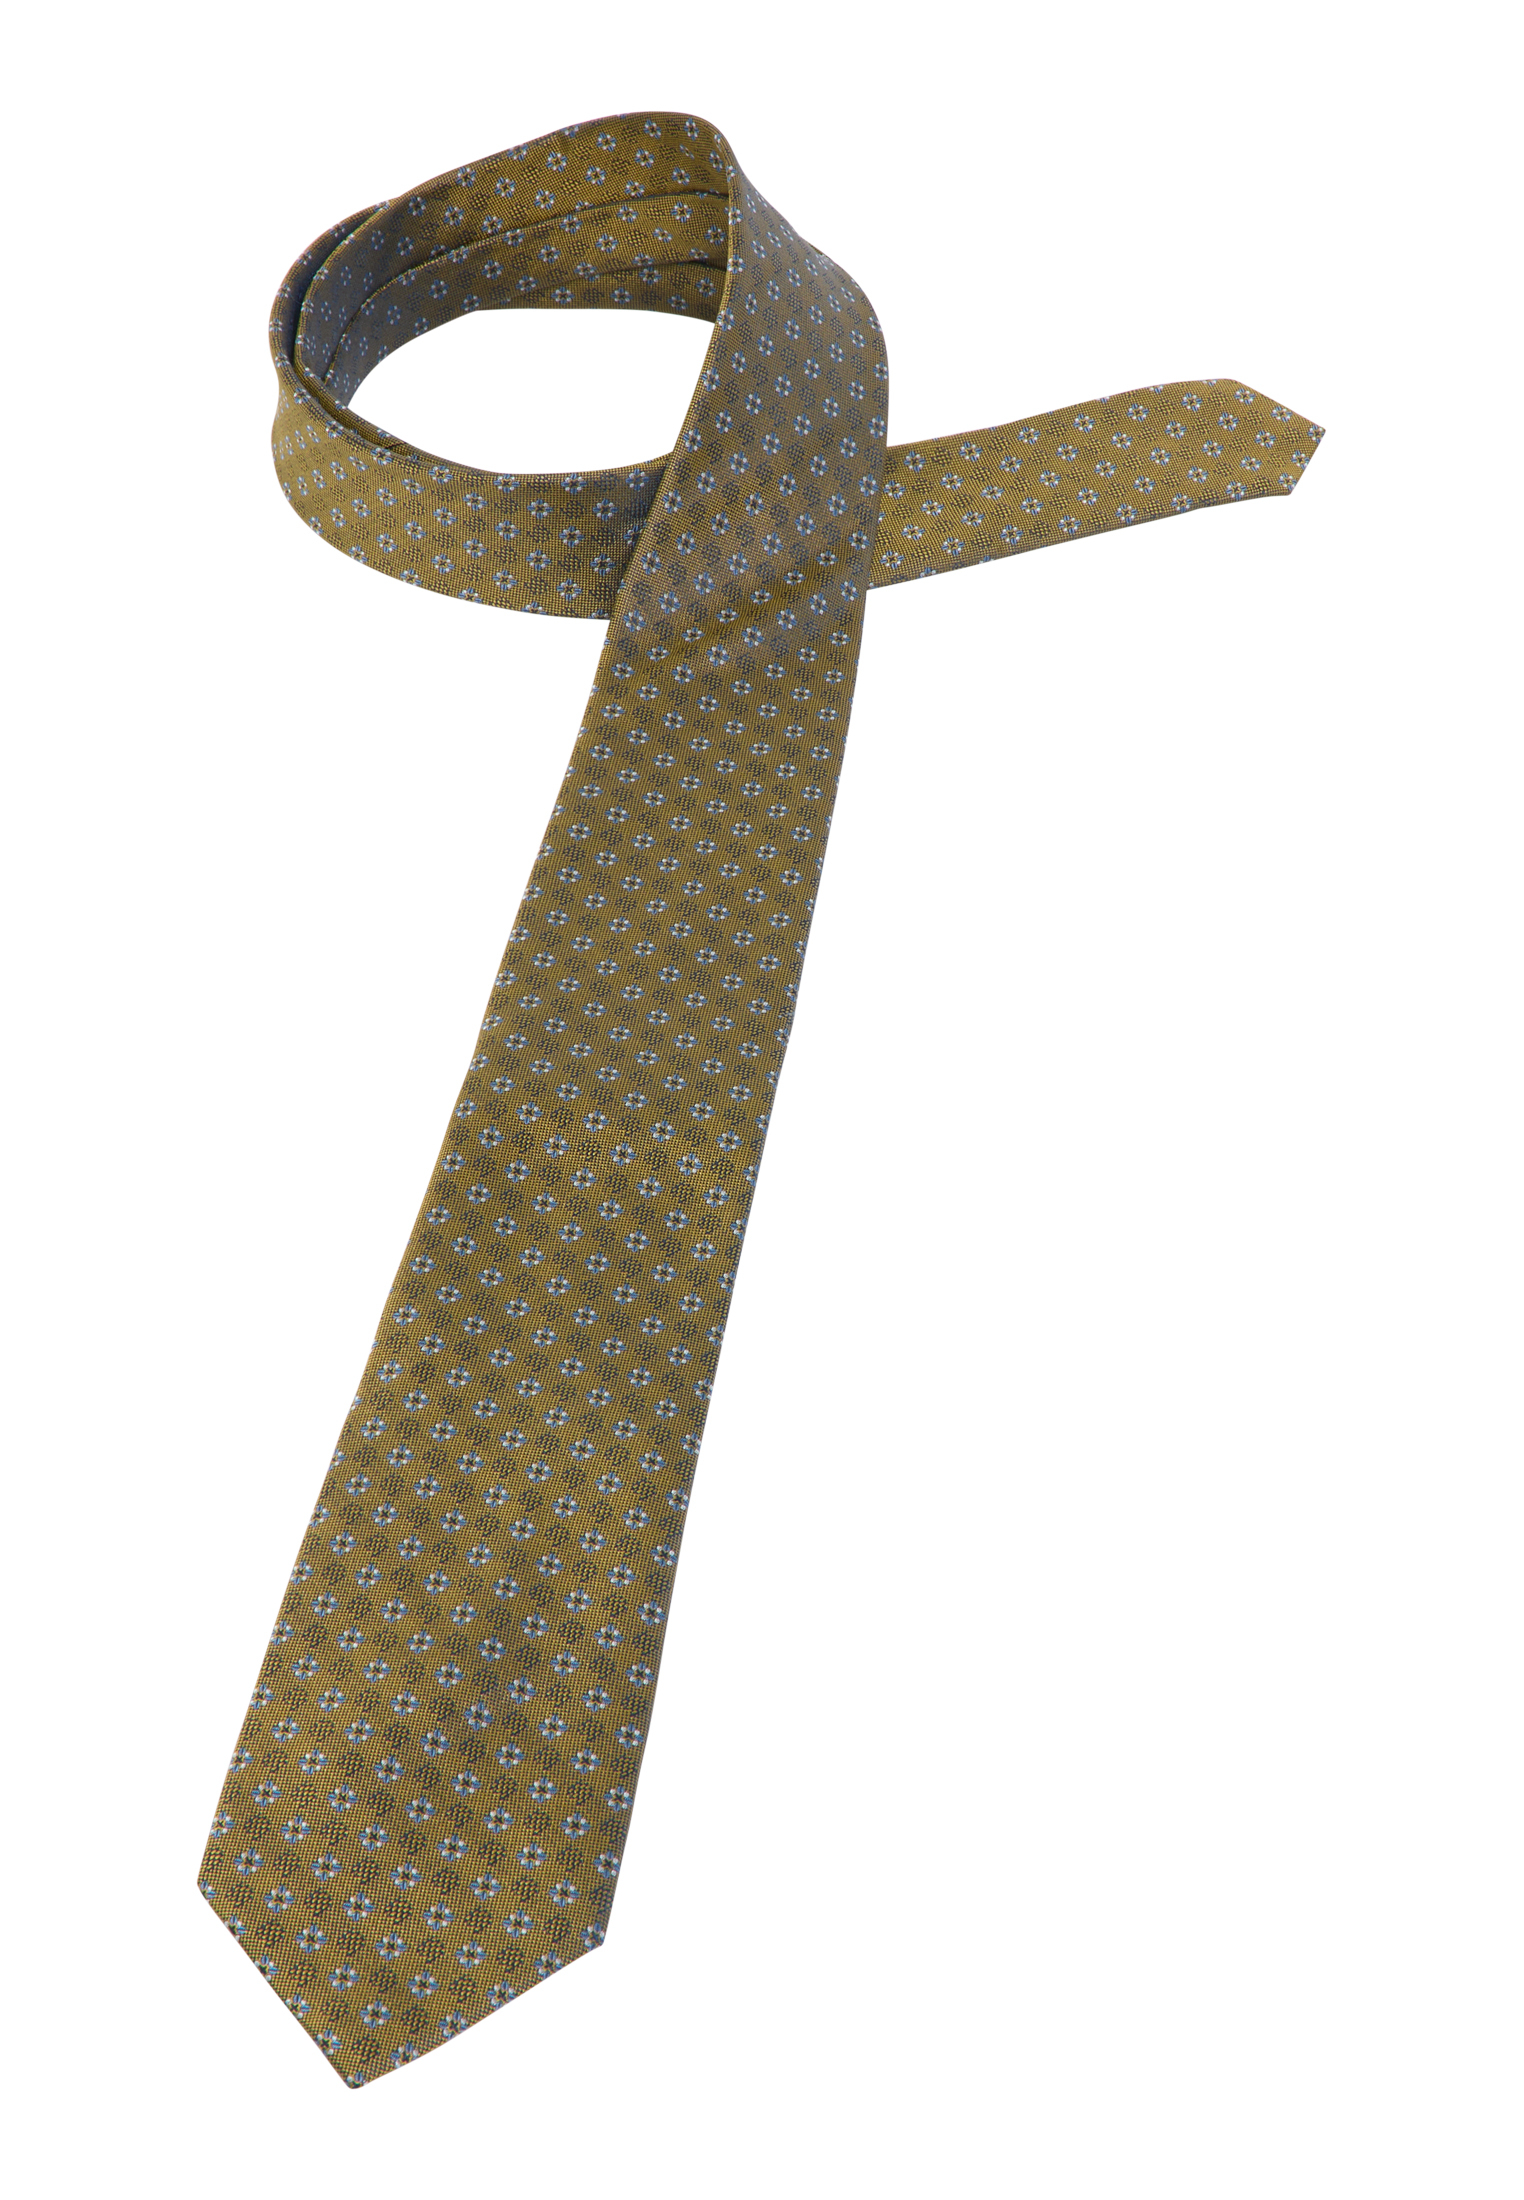 Krawatte in | gemustert | ocker ocker 1AC01899-07-34-142 142 